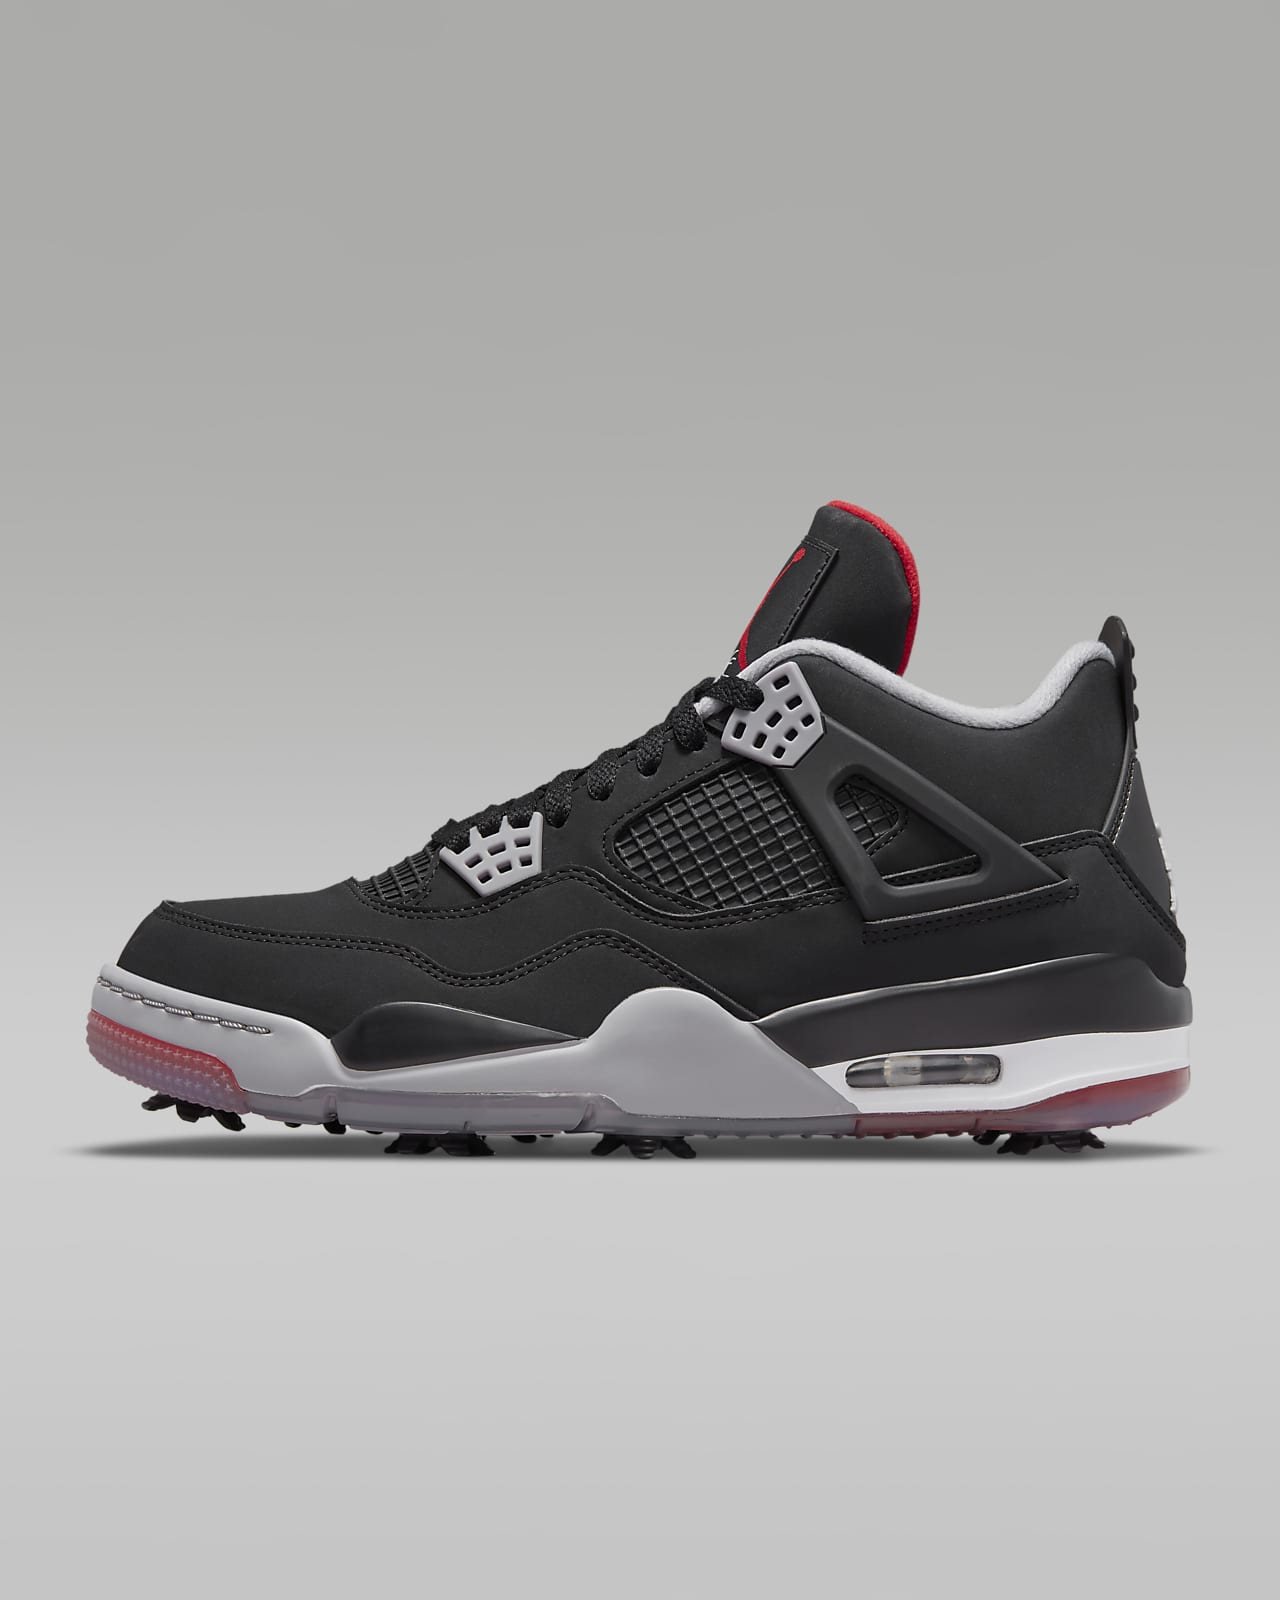 Jordan 4 G Golf Shoes